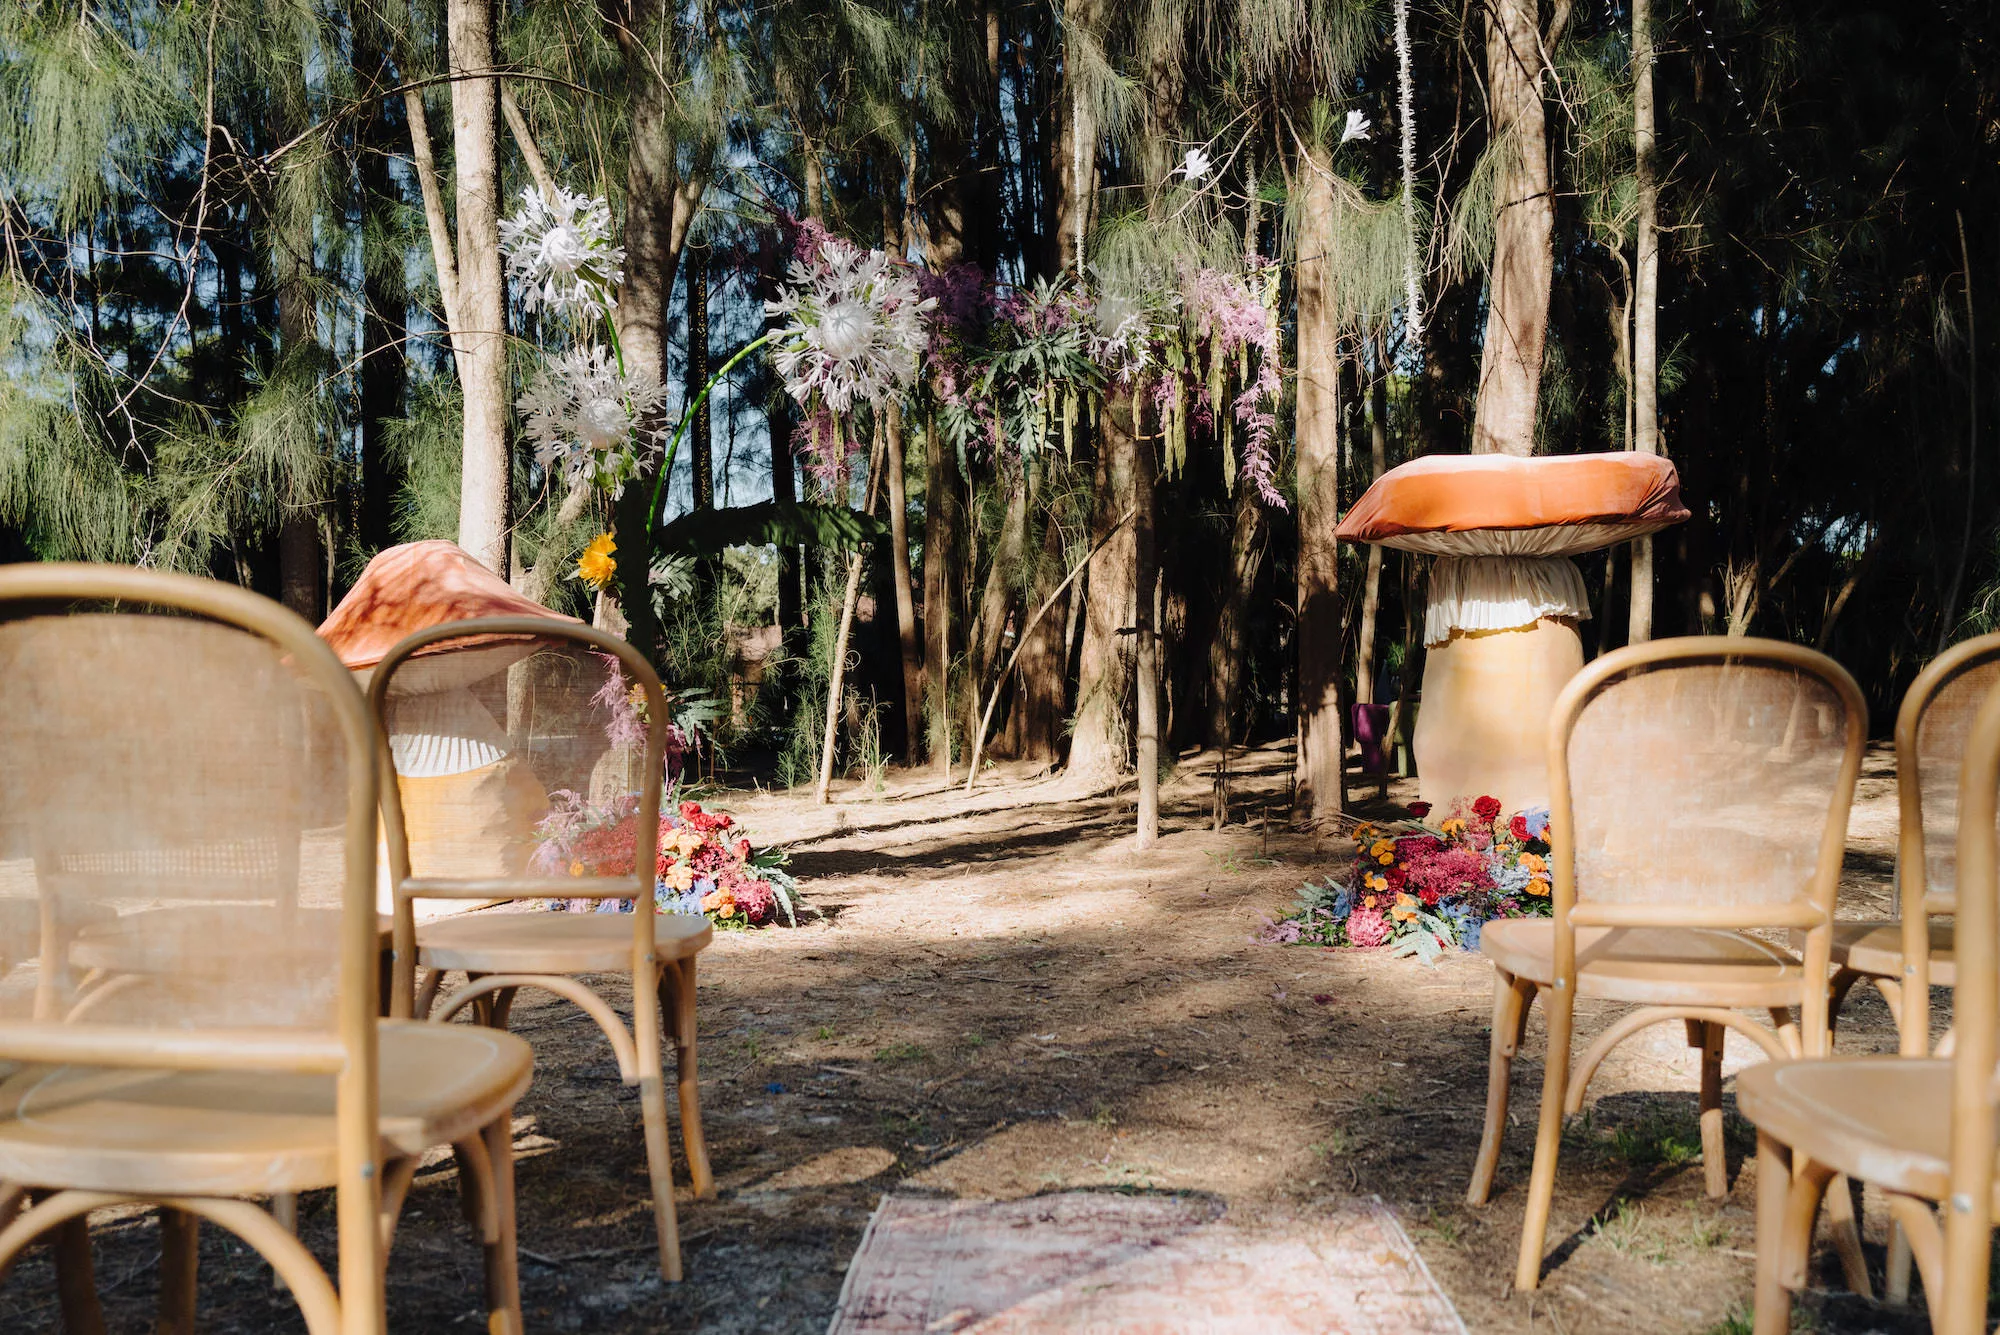 Whimsical Boho Forest Wedding Ceremony Flower Ideas | Mushroom Altar Decor Ideas with Rattan Chairs